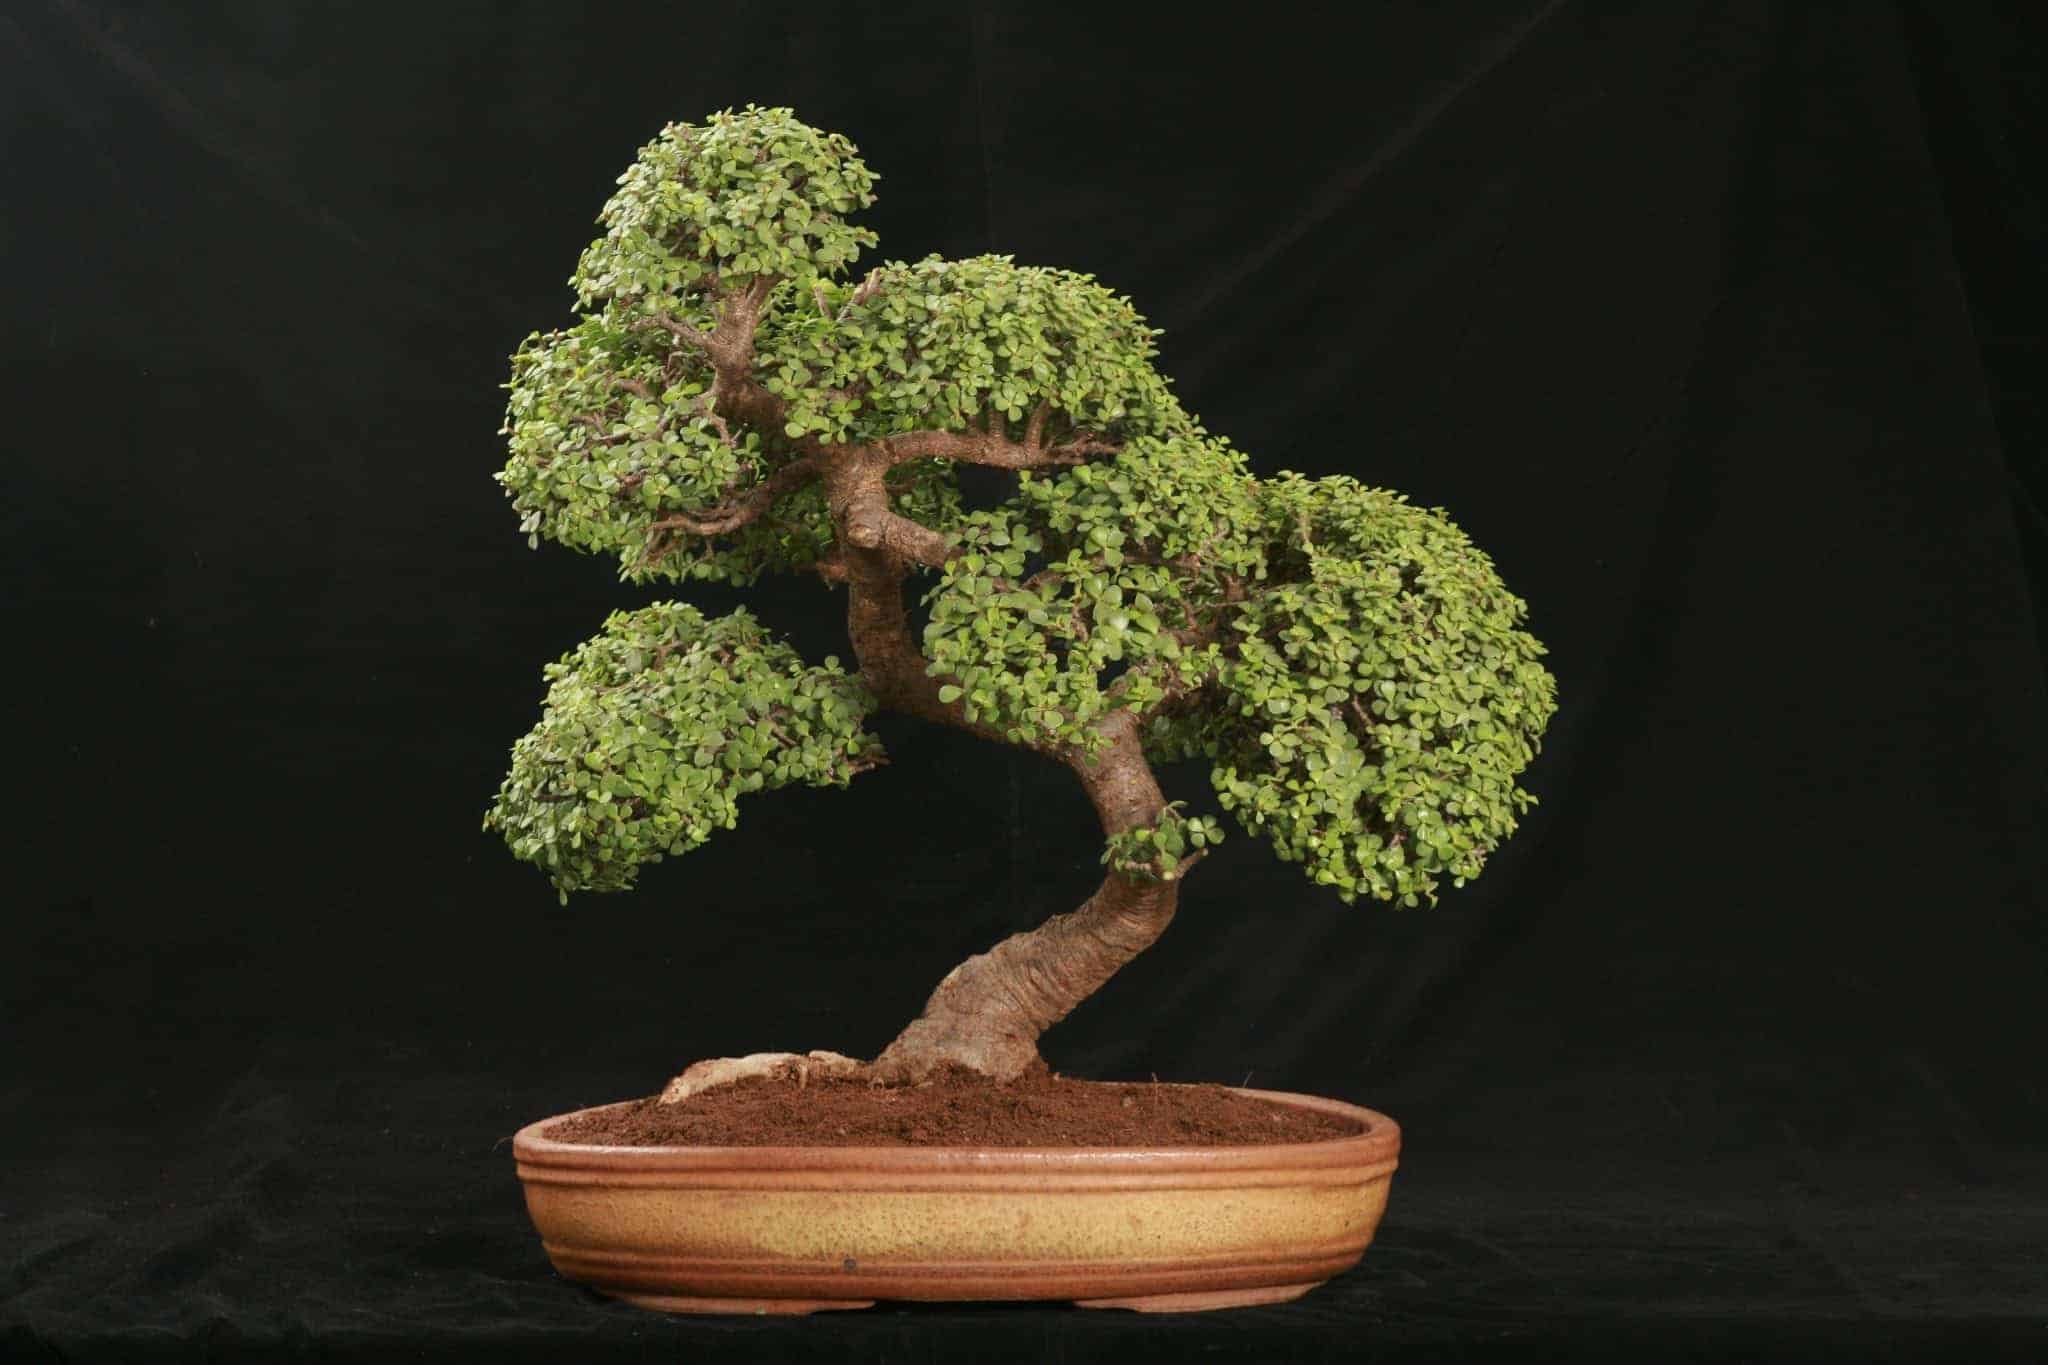 A beautiful indoor dwarf jade bonsai tree in an elegant planter.